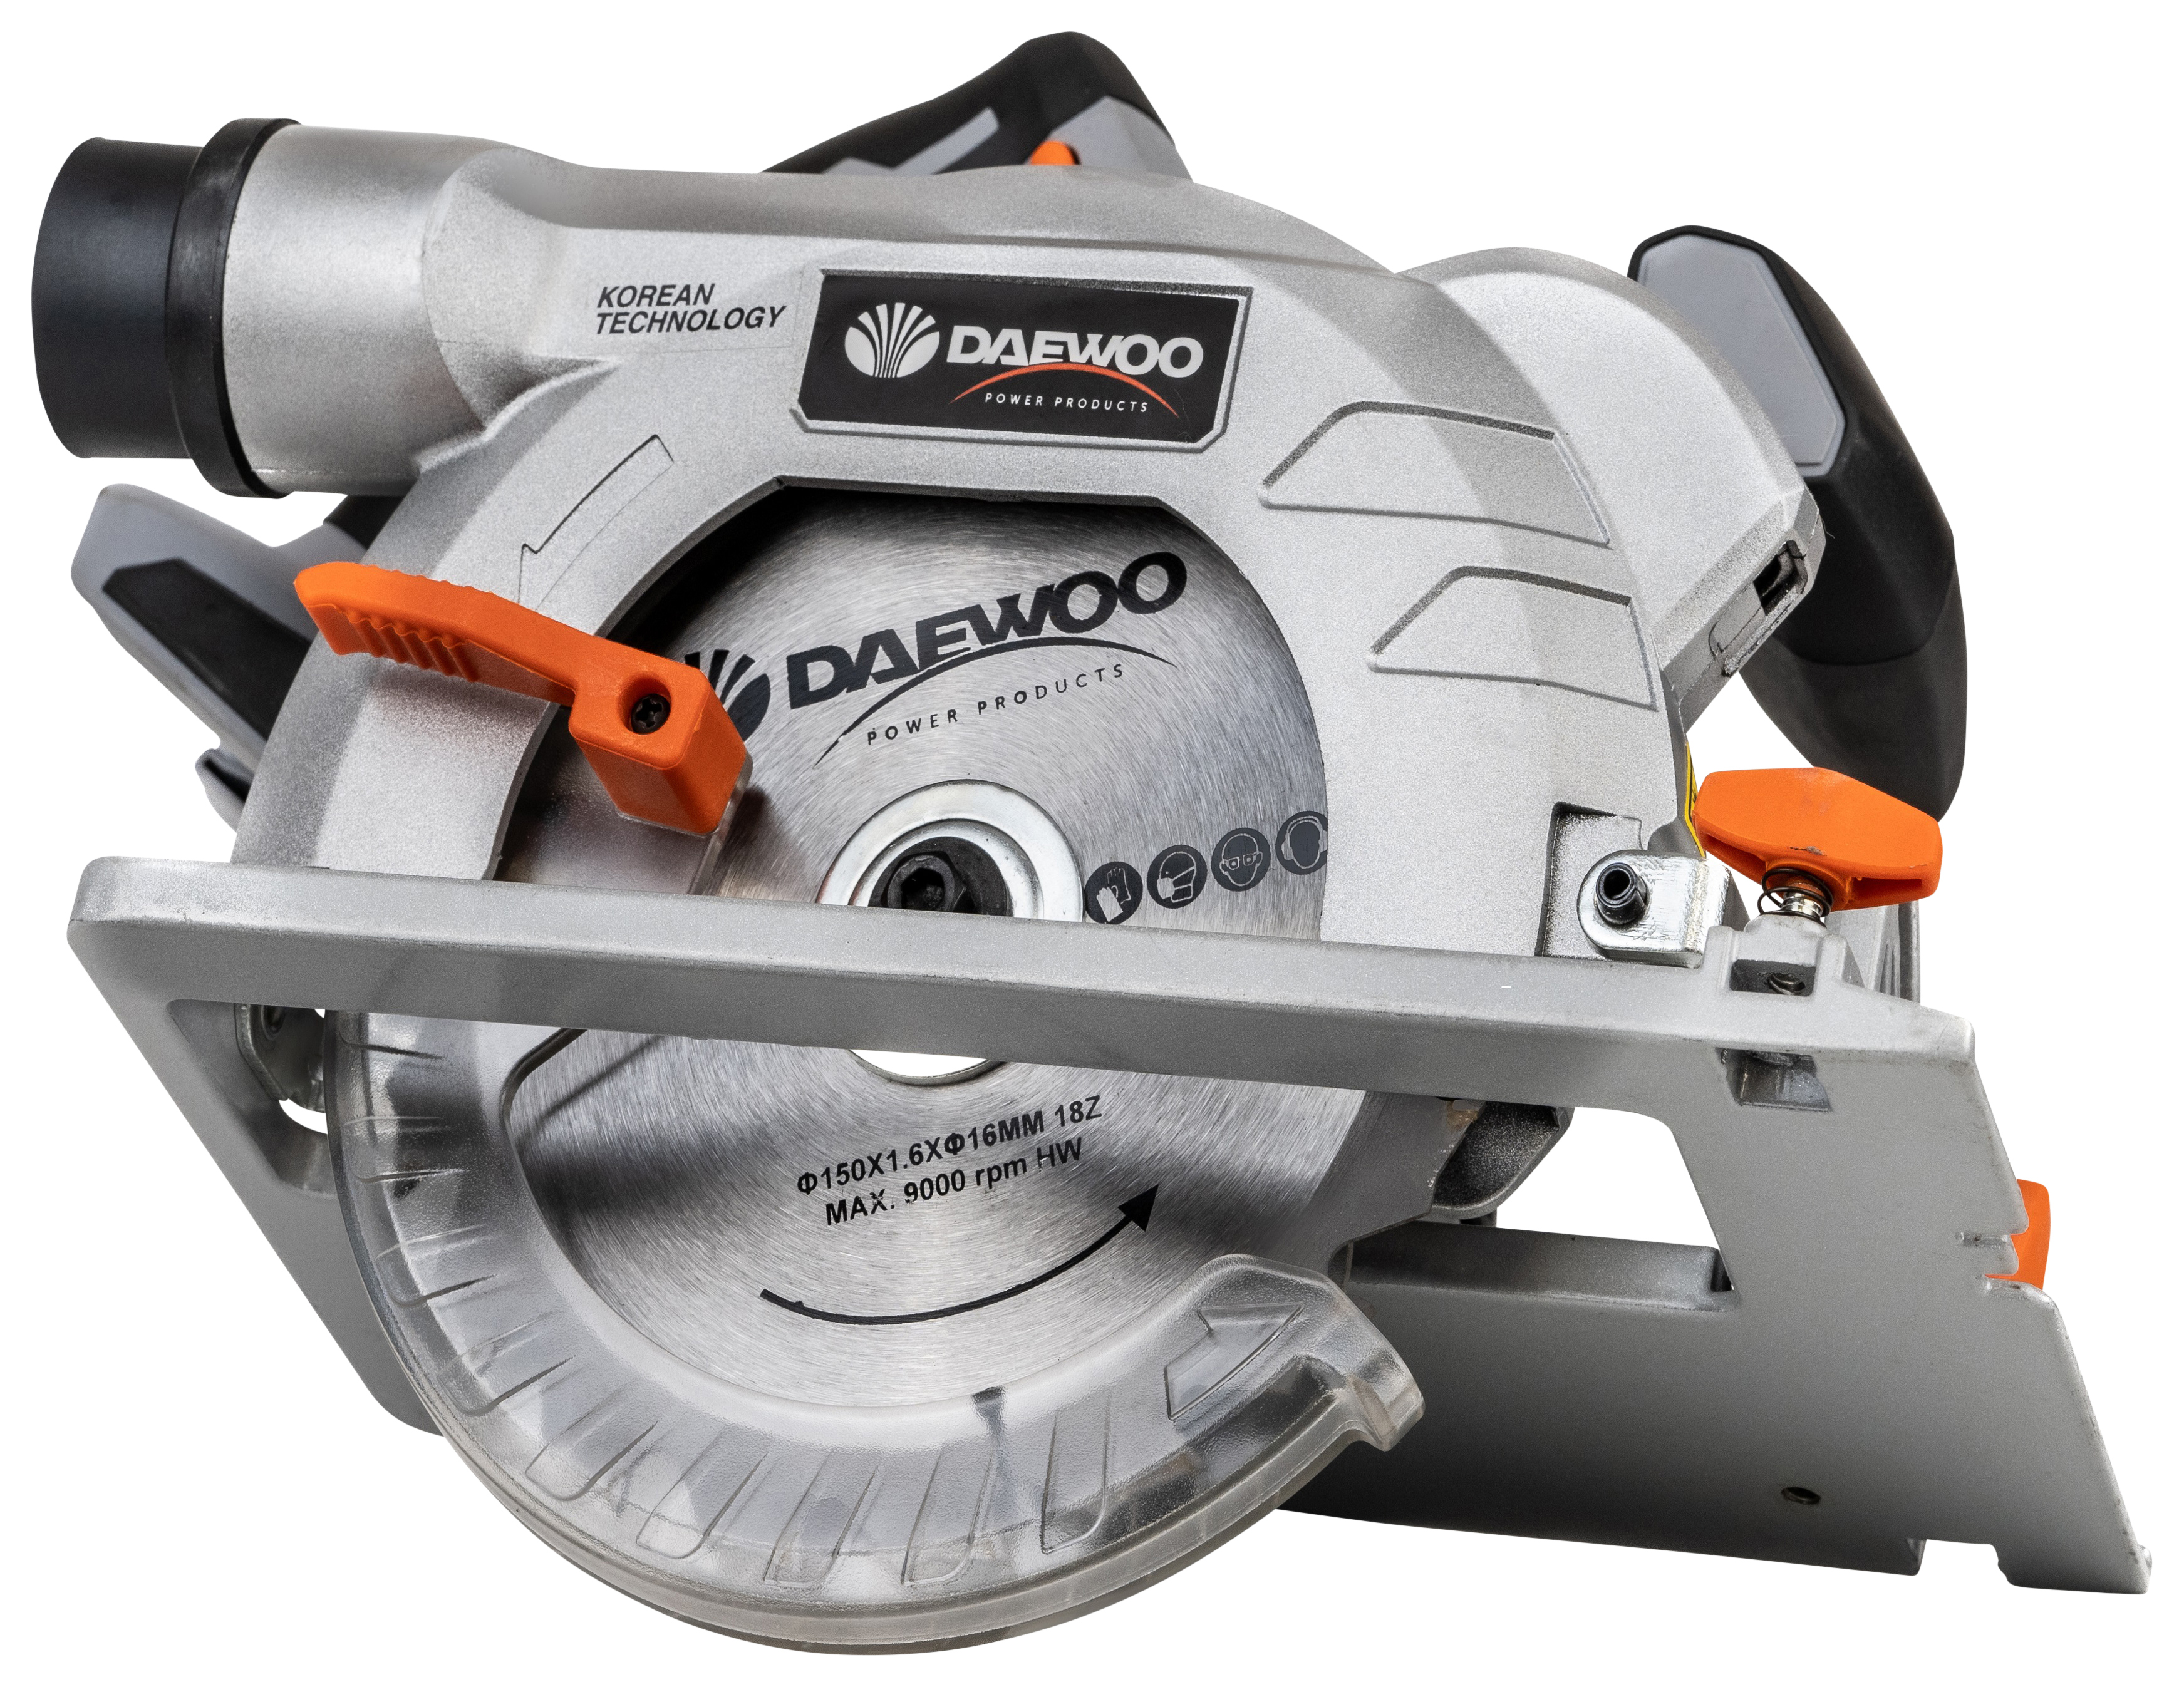 Daewoo DALCS18-1-2B1C1 U-Force Li-ion 1 x 2.0Ah Cordless 150mm Circular Saw - 18V